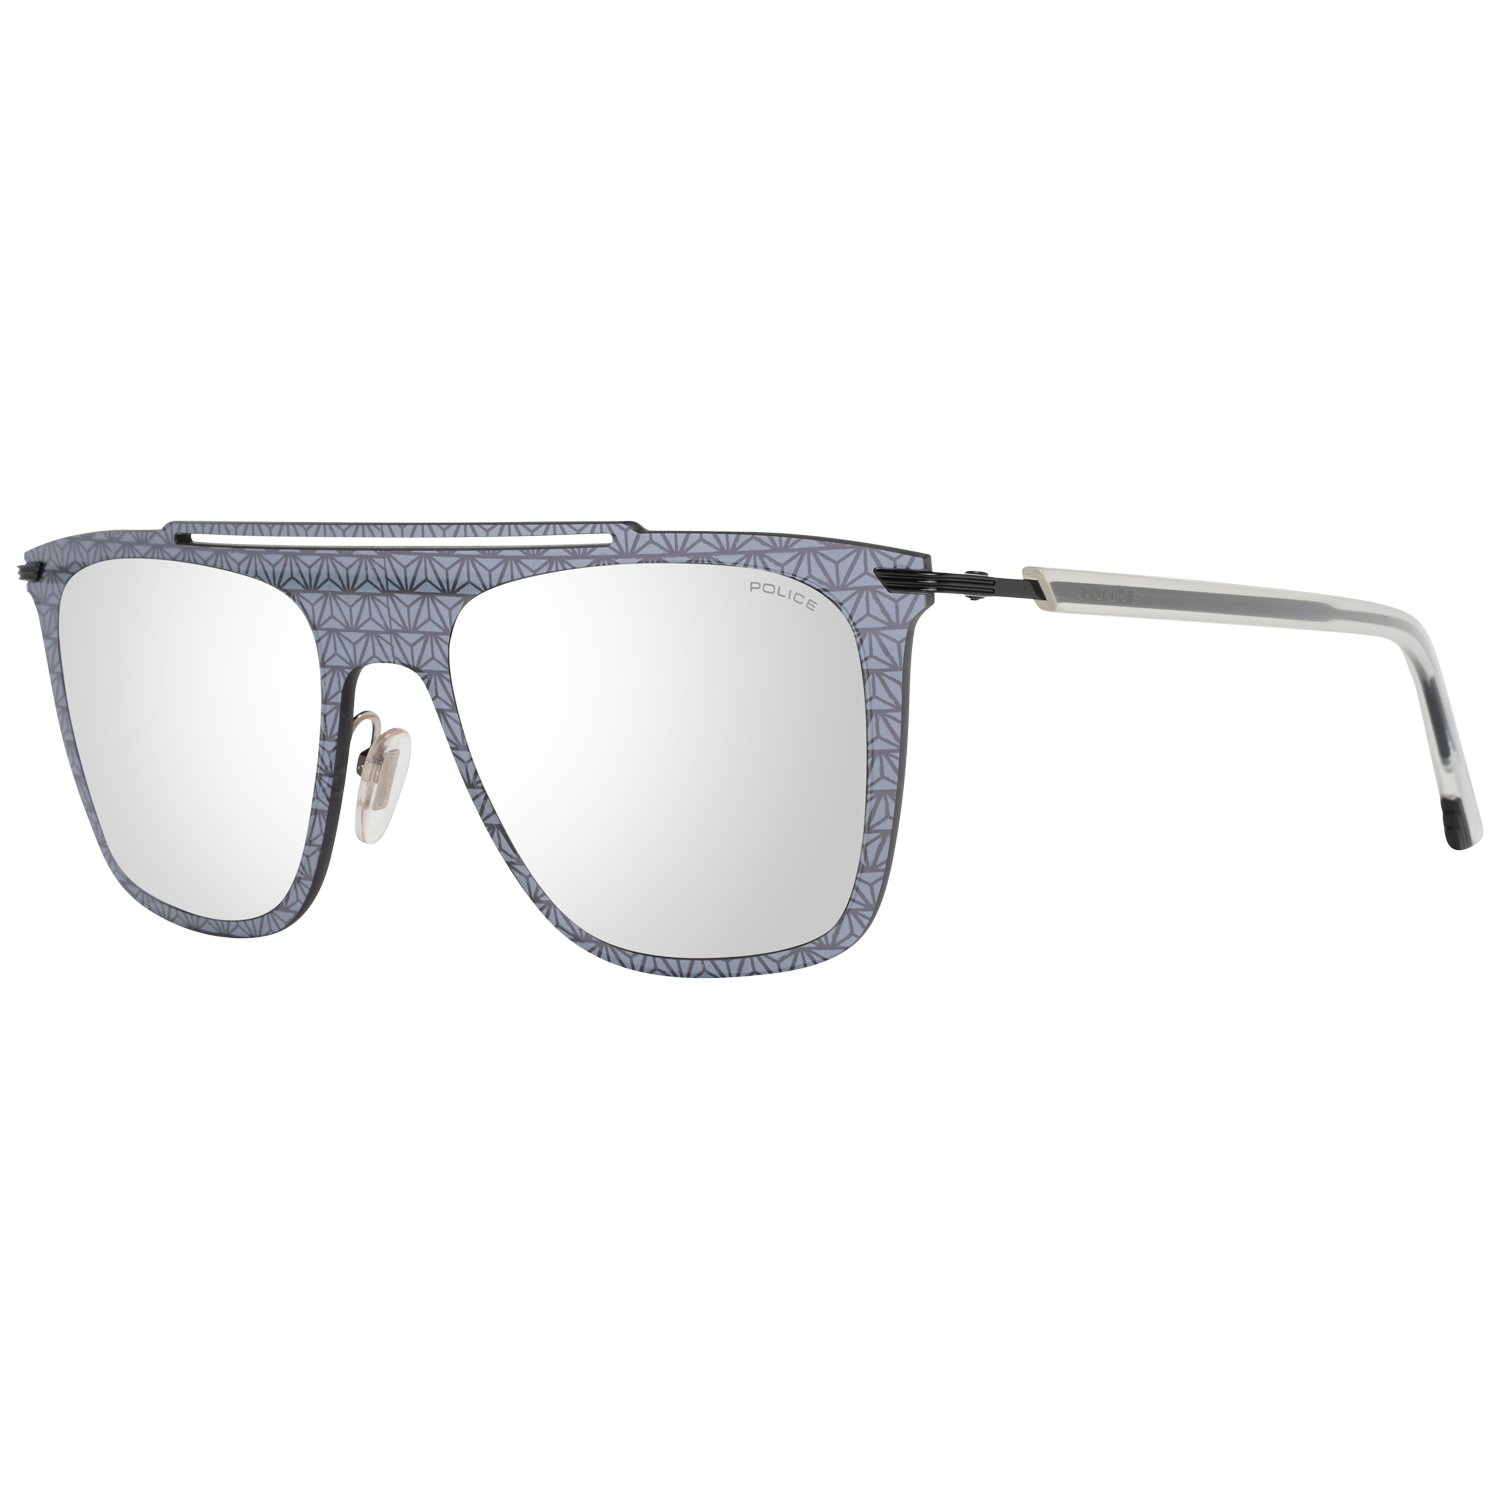 Police Sunglasses Police Sunglasses Men's SPL581 530L 52 Eyeglasses Eyewear UK USA Australia 